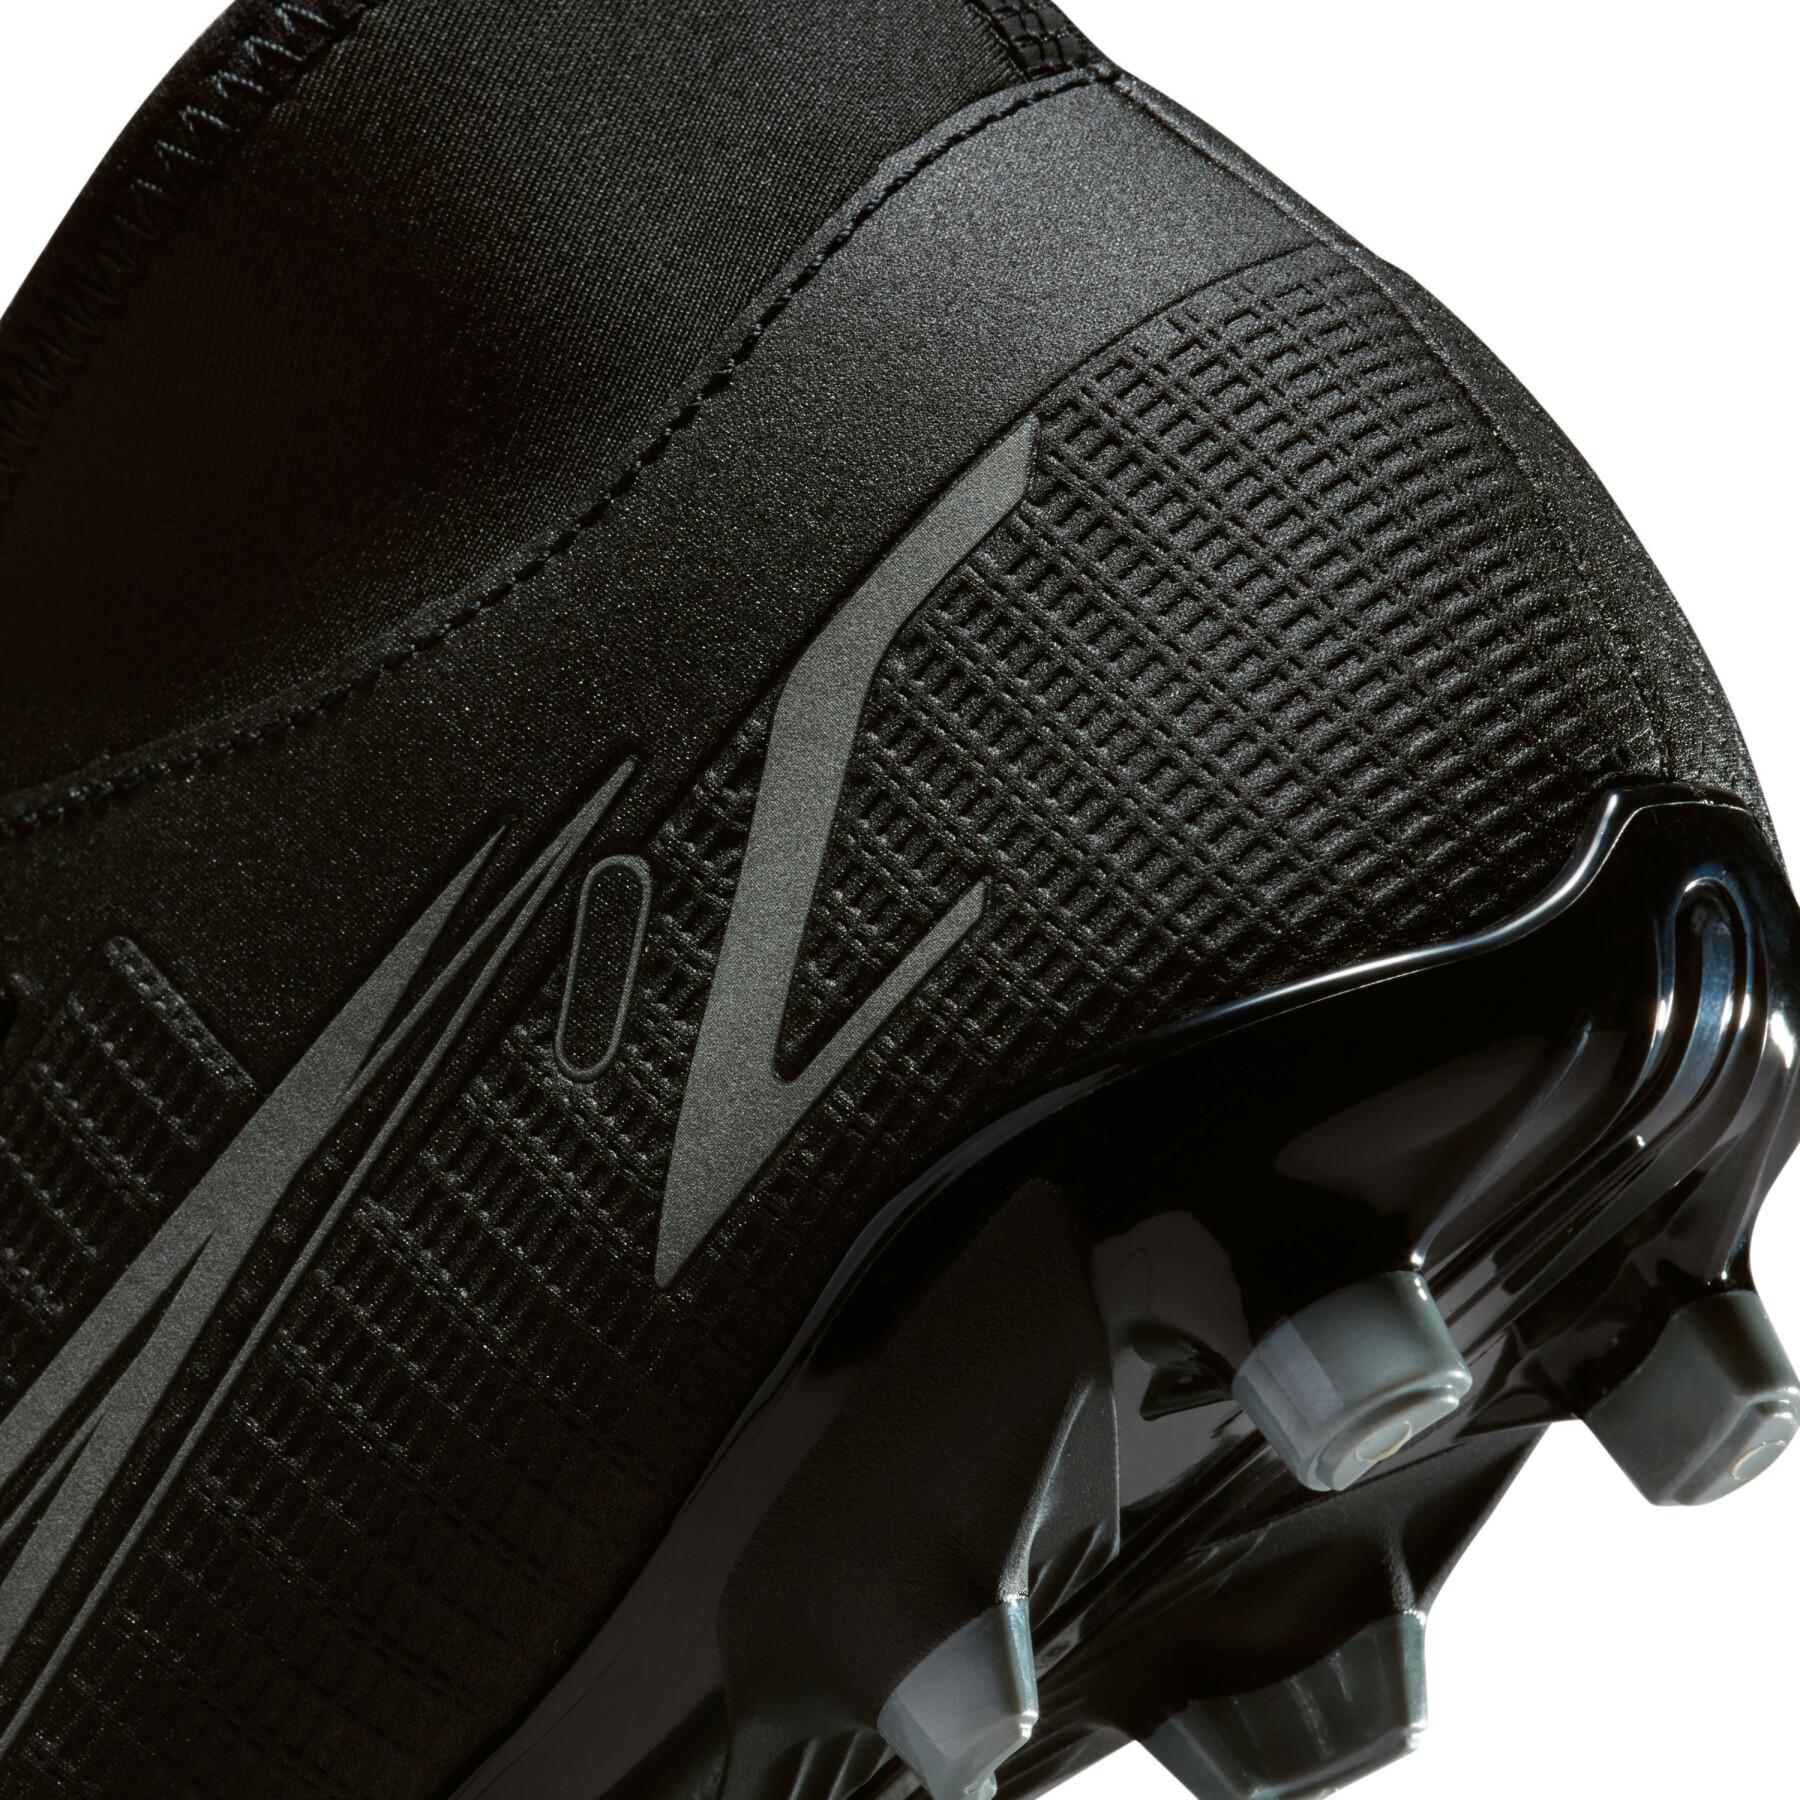 Sapatos de futebol Nike Mercurial Superfly 8 Club MG